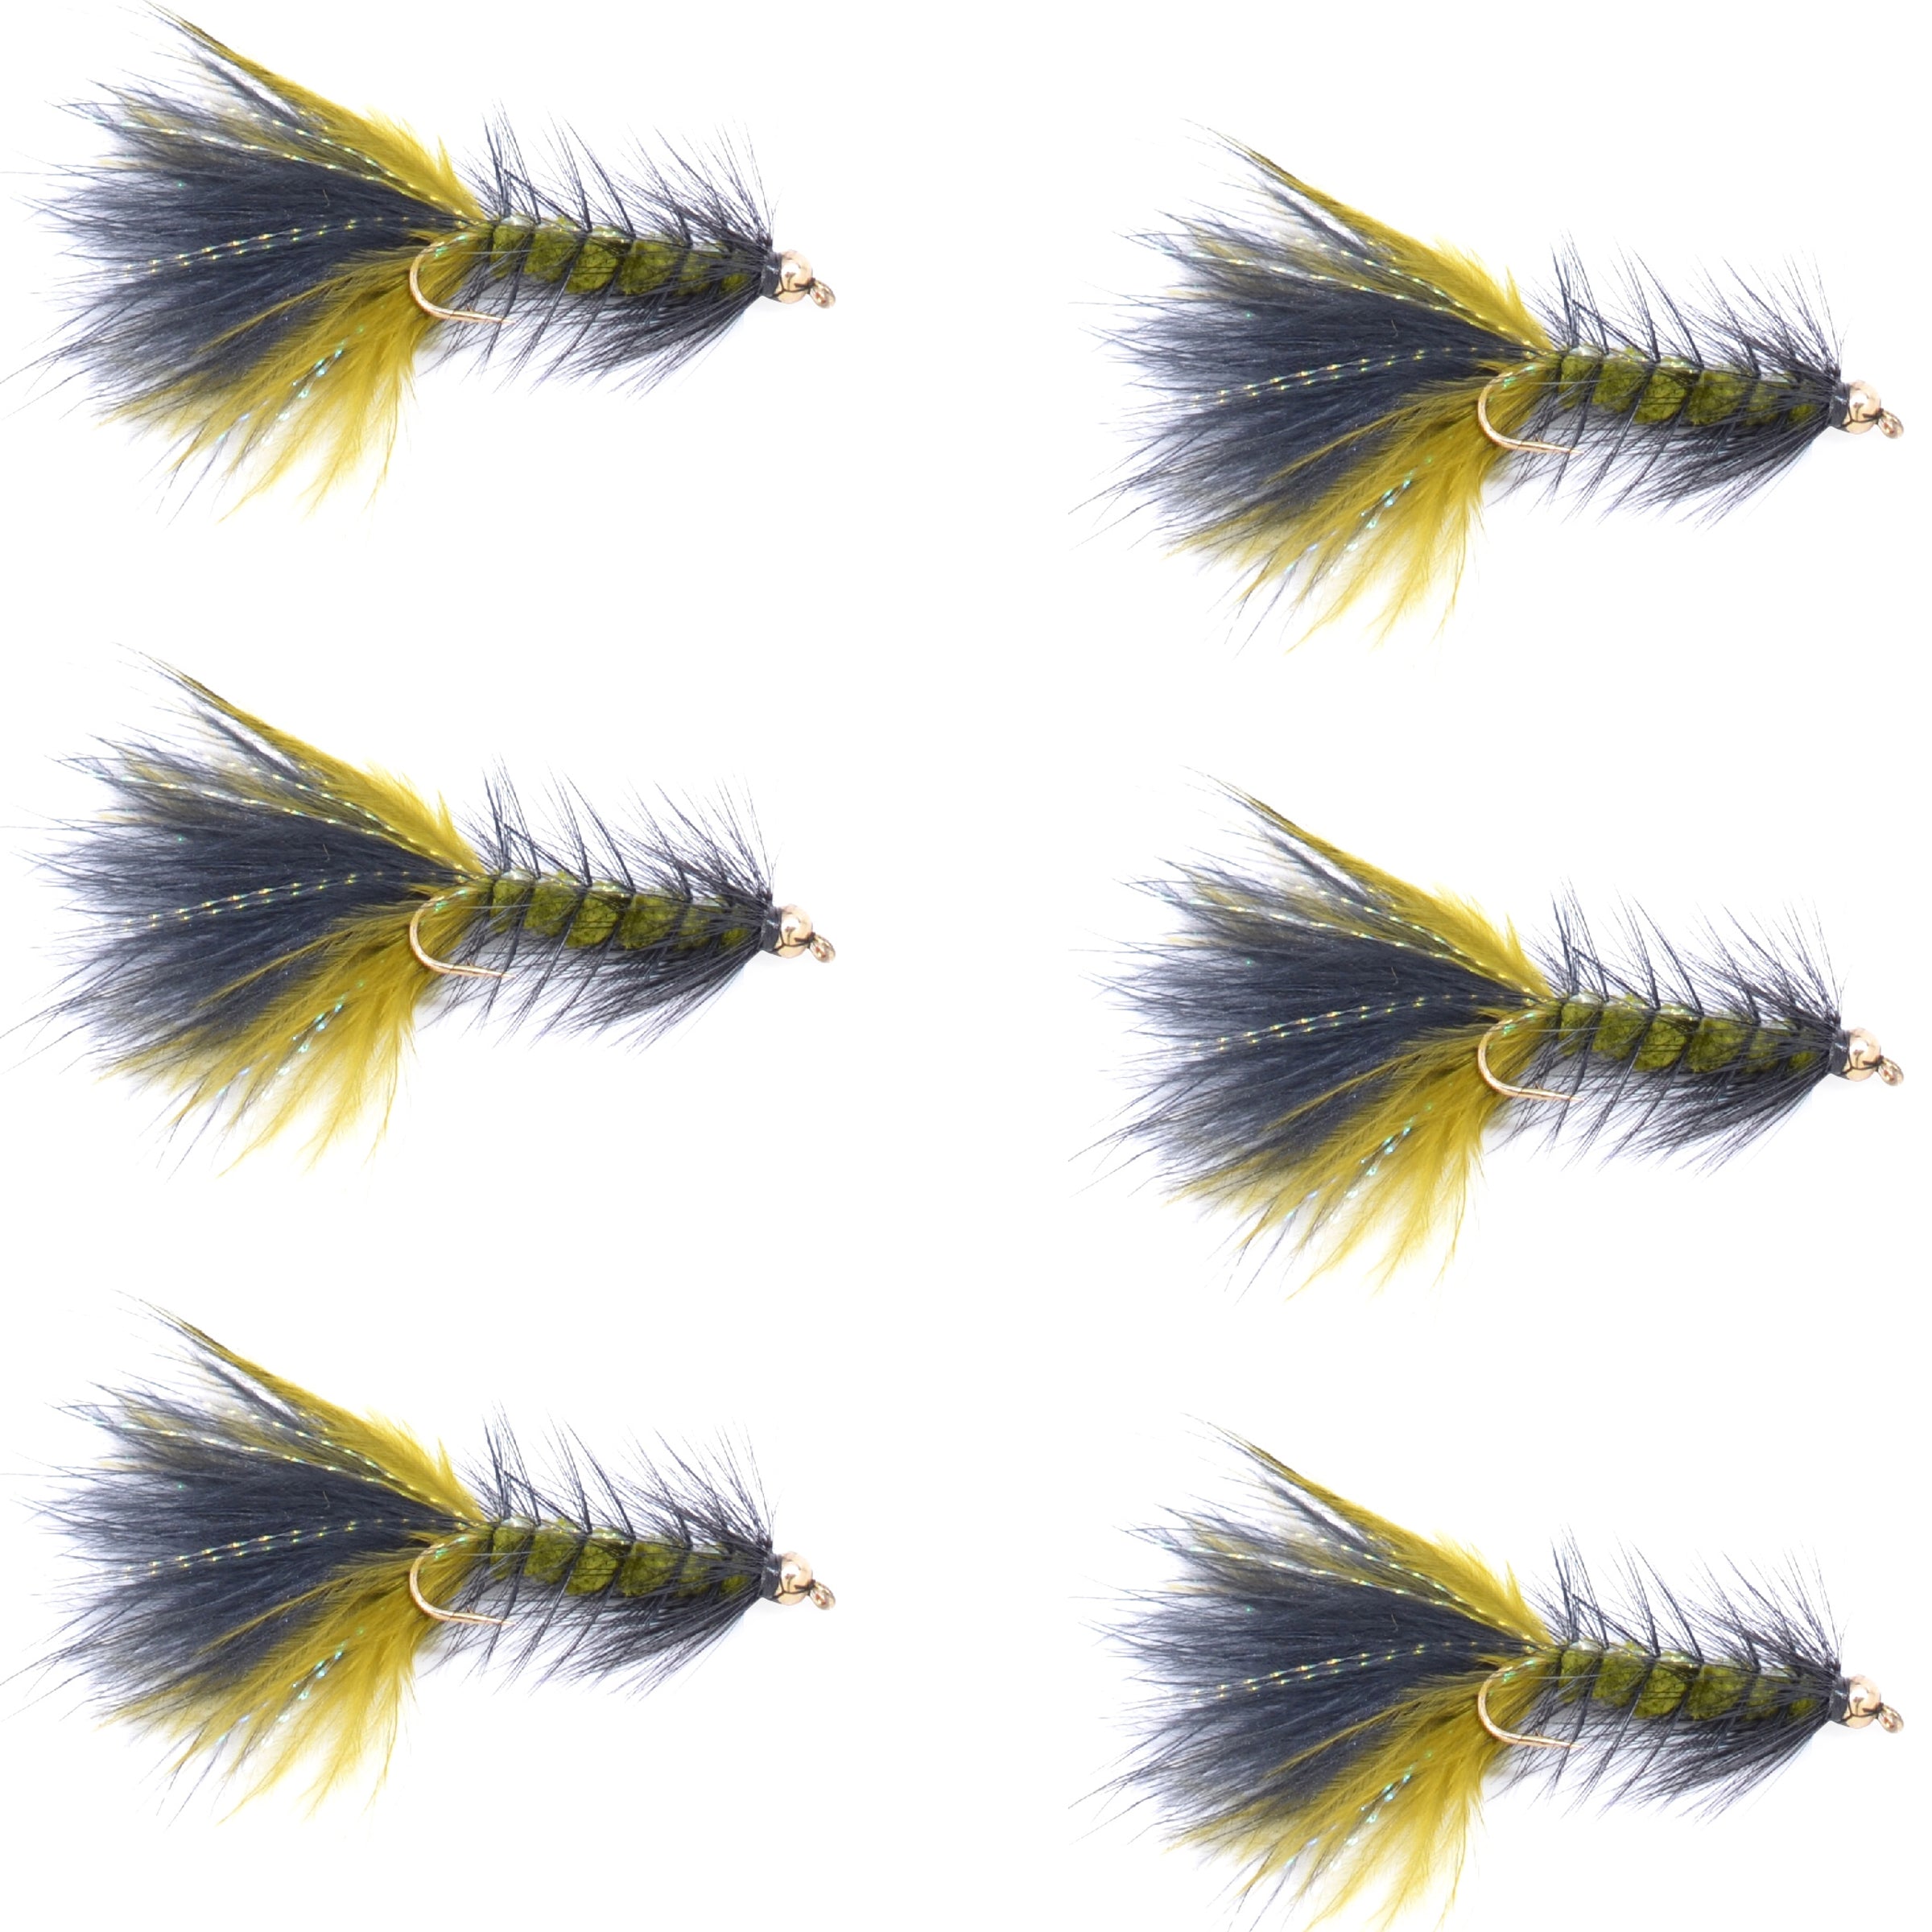 Moscas Streamer clásicas con cabeza de cuentas de cristal, color negro oliva, juego de 6 moscas para pesca con mosca de trucha, tamaño de anzuelo 4